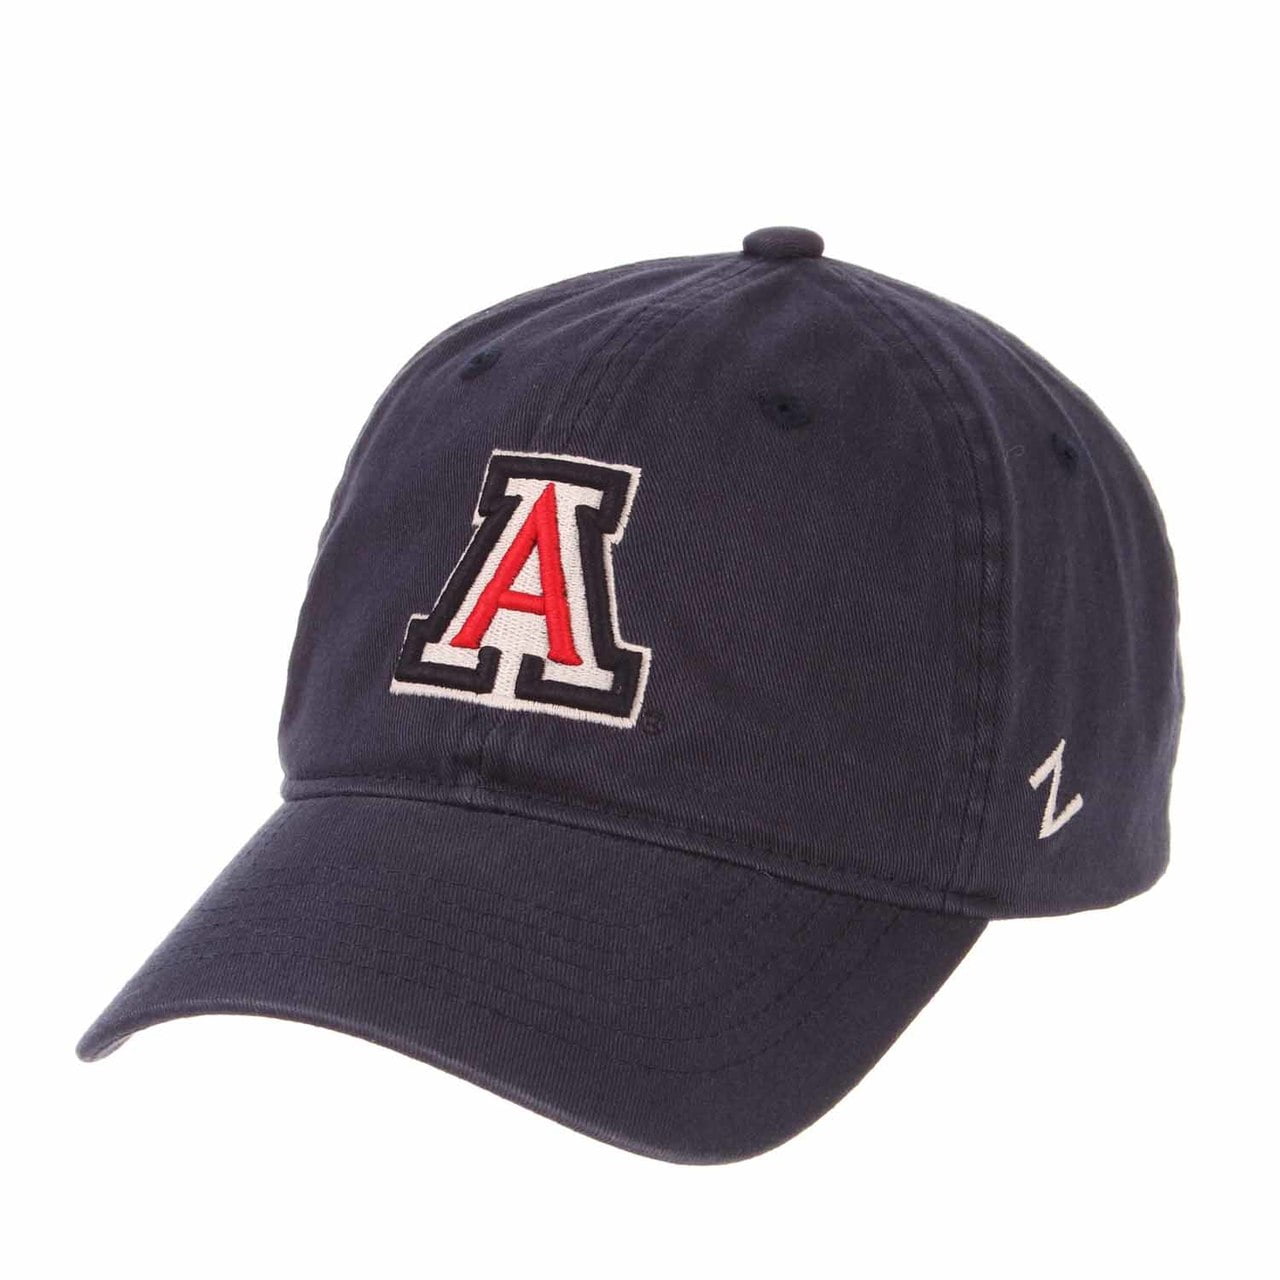 NCAA - Adult Scholarship Adjustable Hat - Team Color - Walmart.com ...